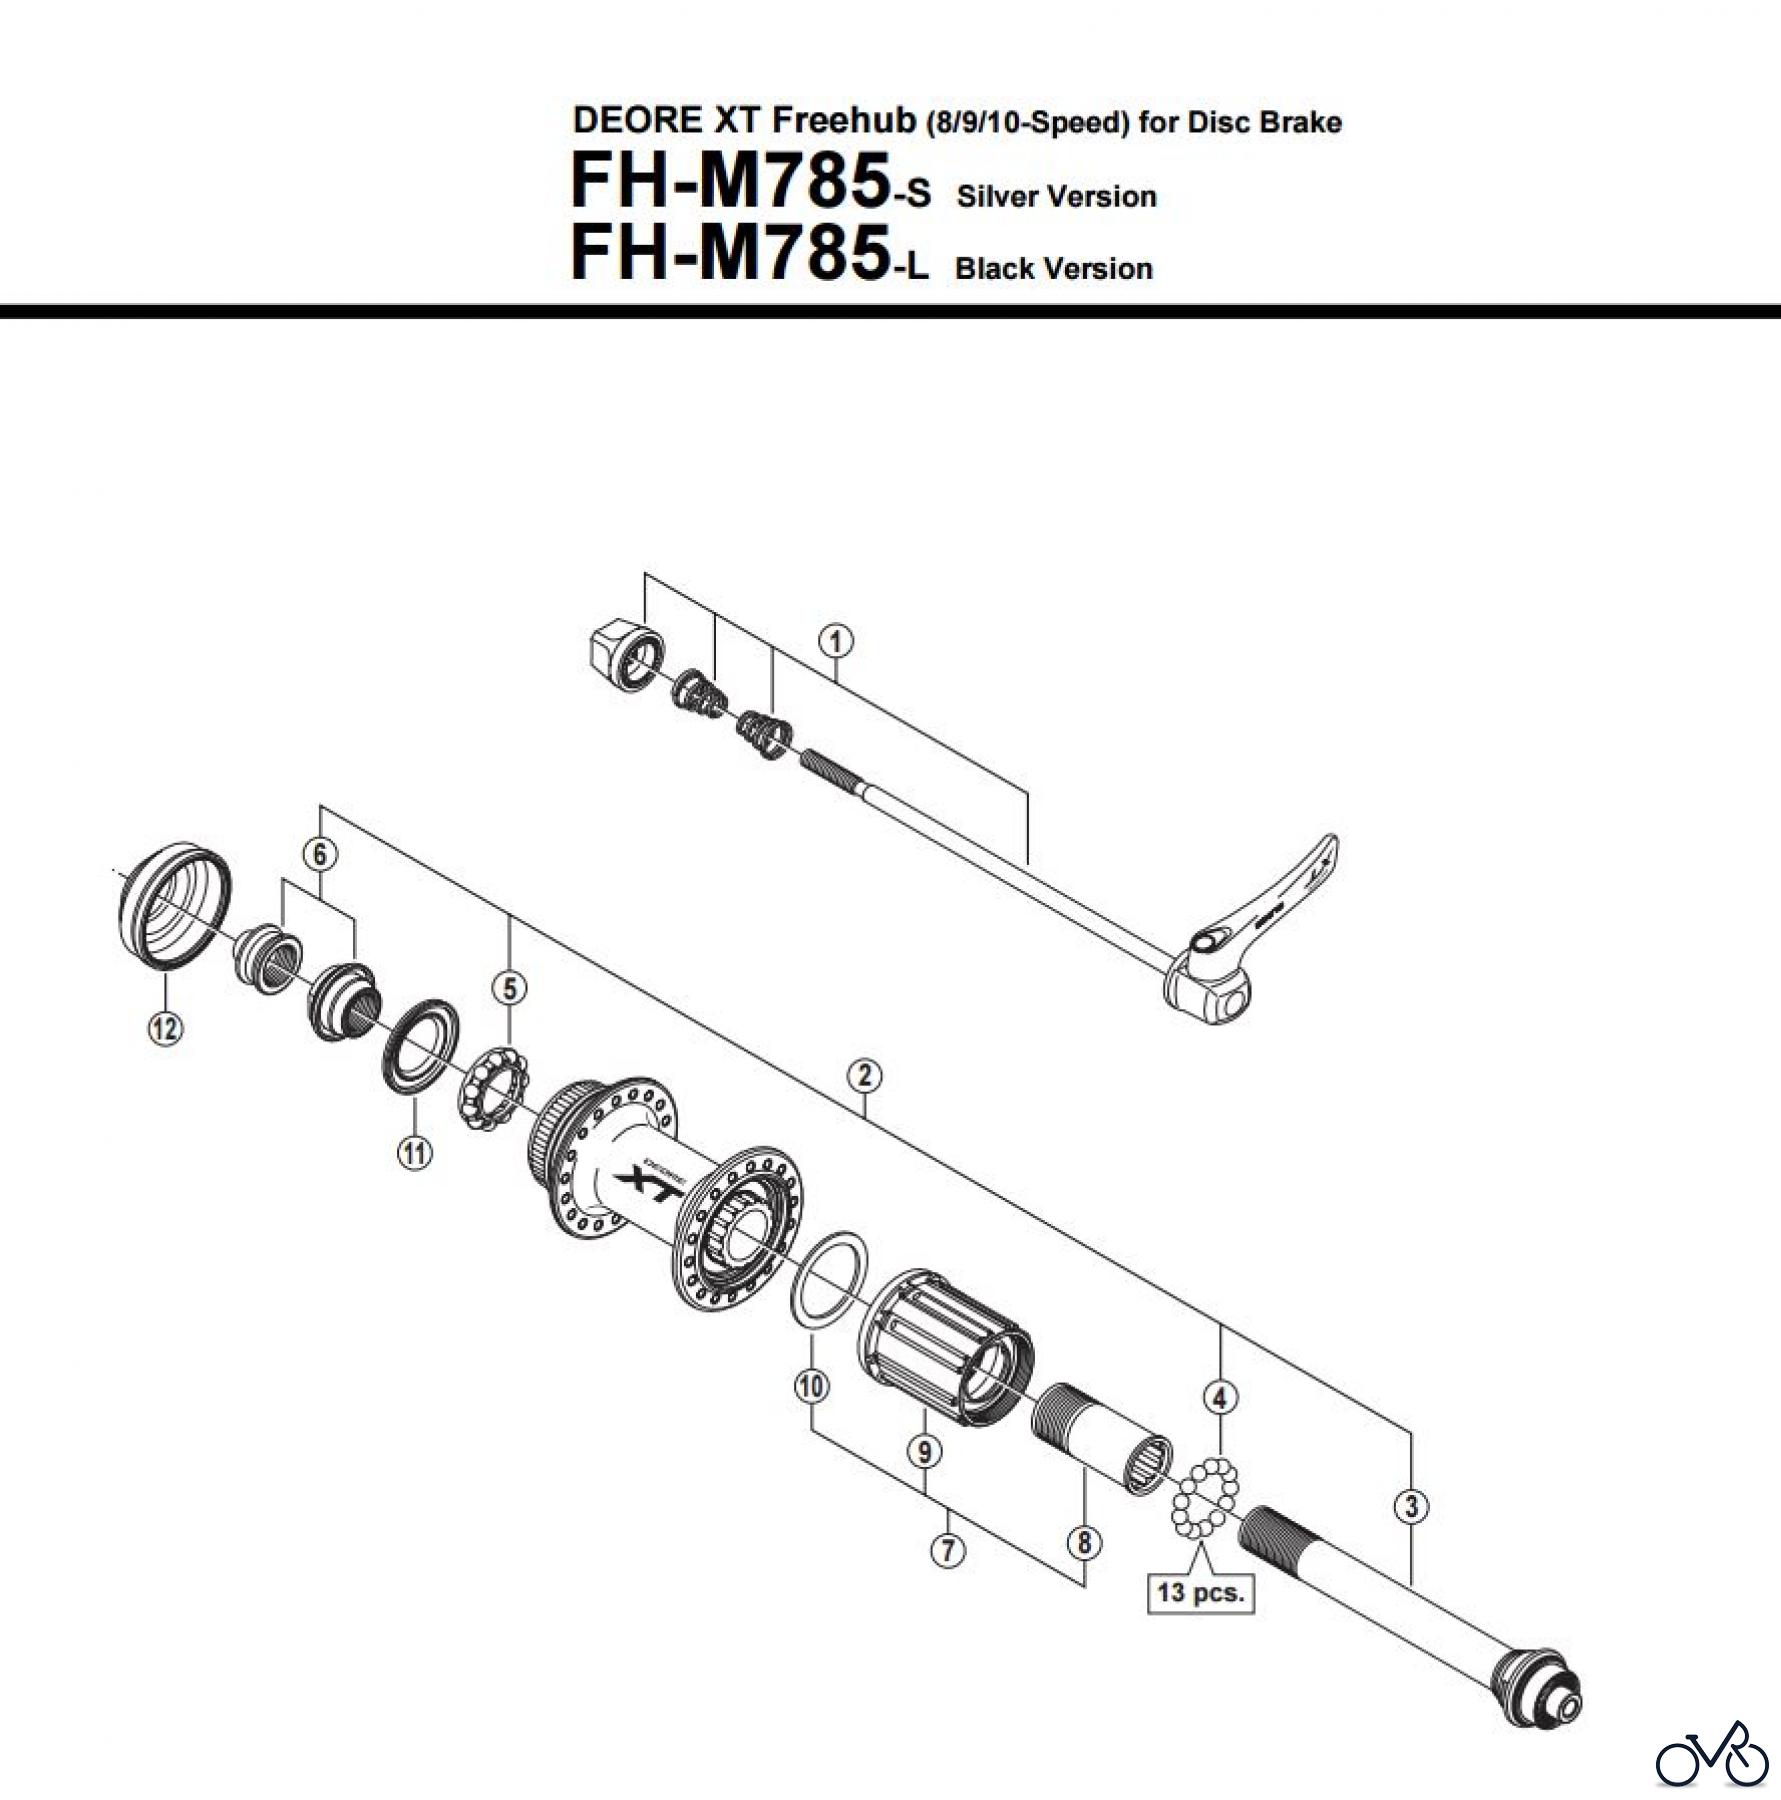  Shimano FH Free Hub - Freilaufnabe FH-M785 -3174  DEORE XT Freehub (8/9/10-Speed) for Disc Brake